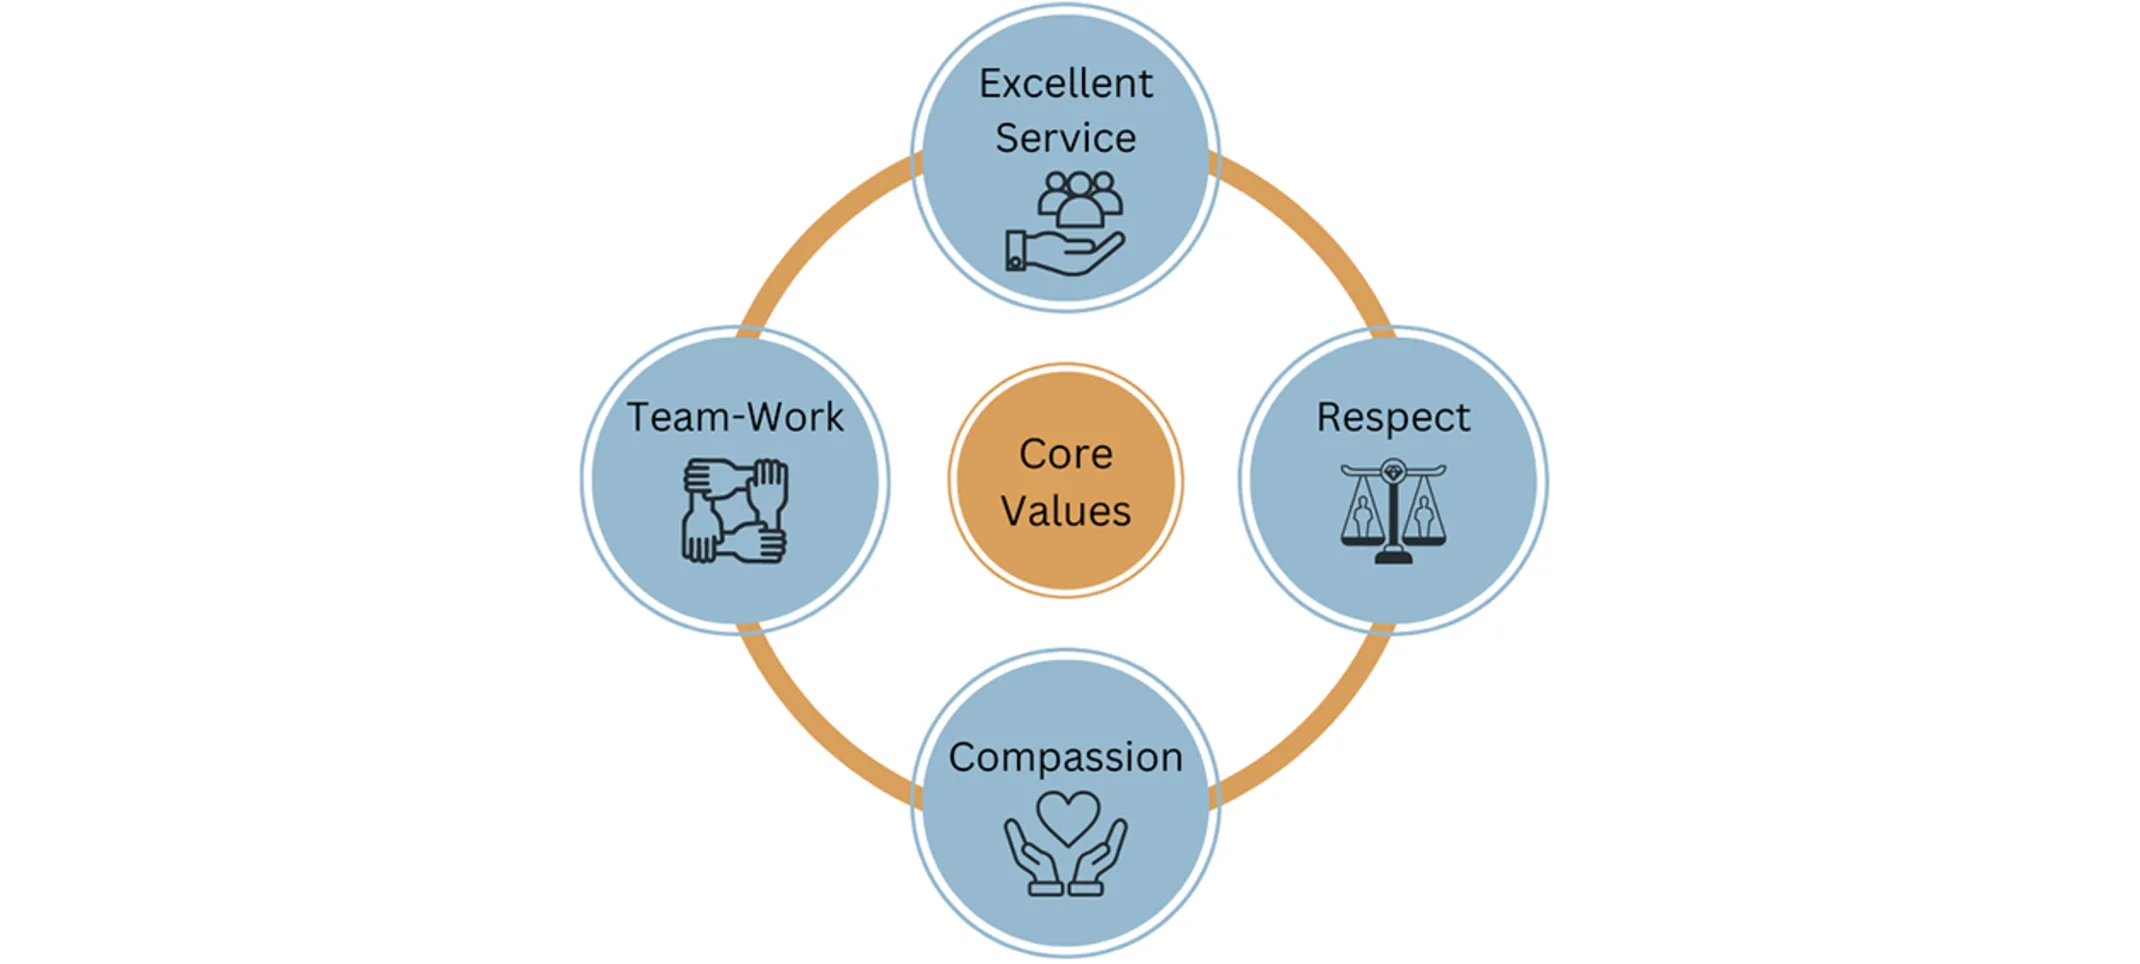 core values: excellent service, respect, compassion, team-work